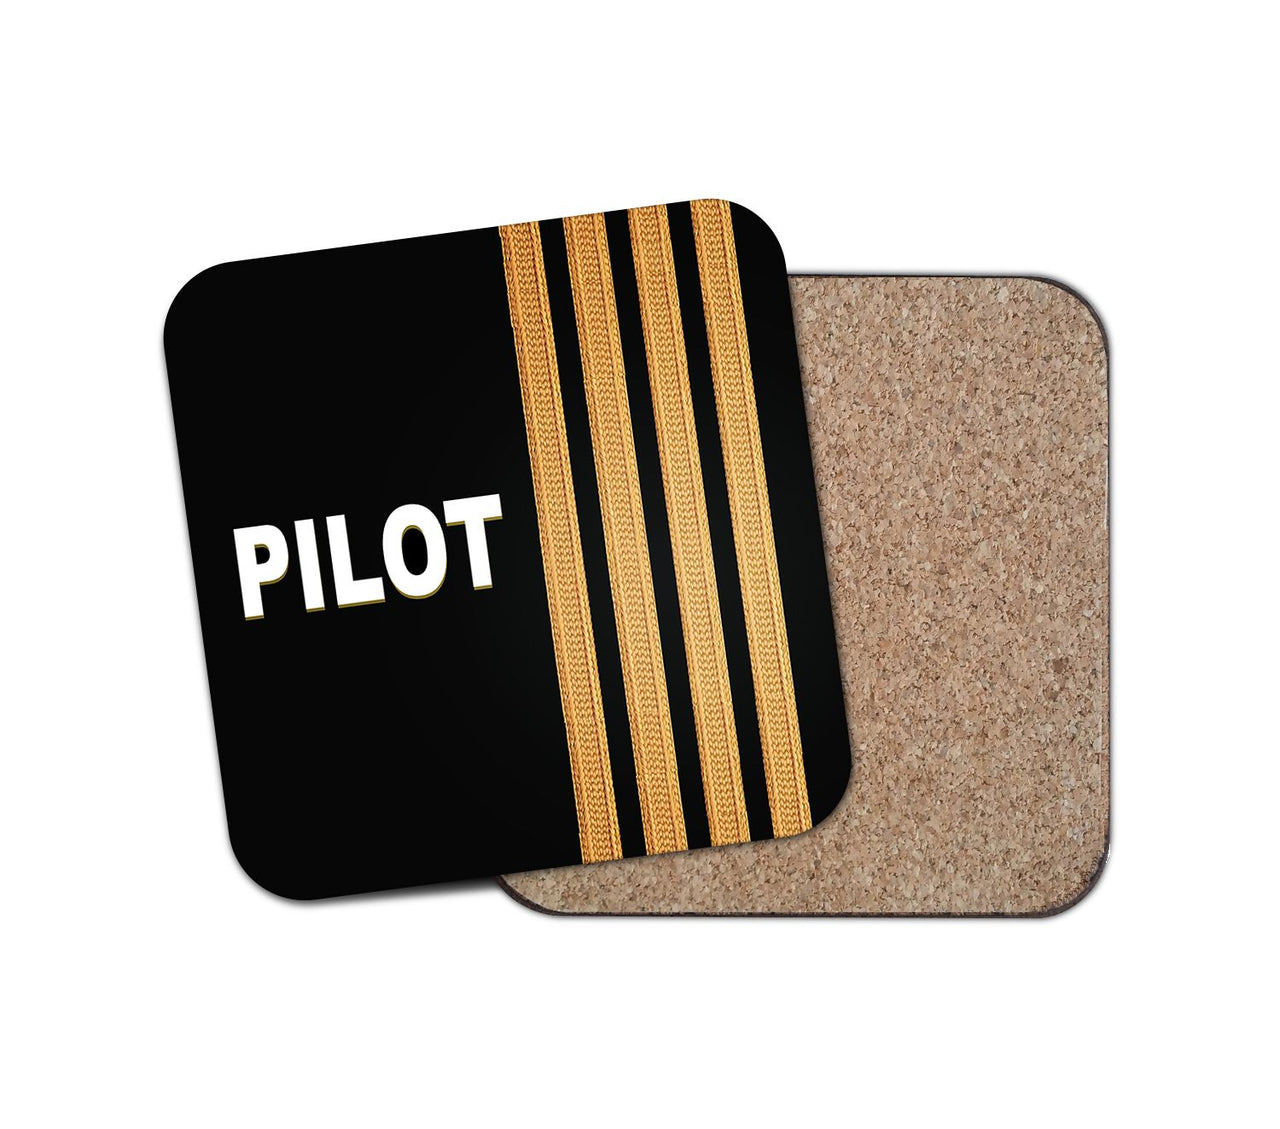 PILOT & Epaulettes 4 Lines Designed Coasters